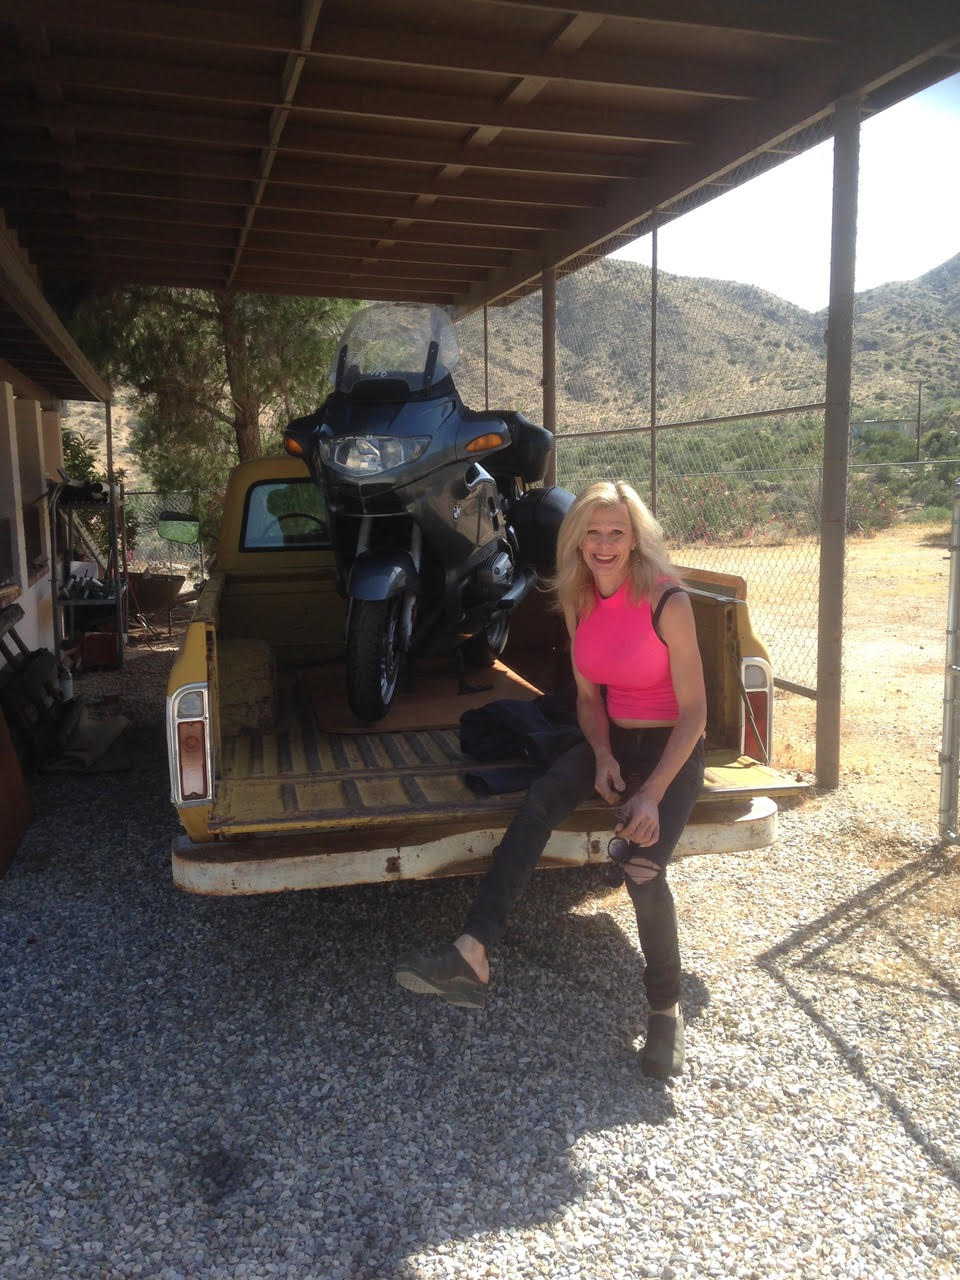 Robin Hodgson posing with her motorcycle. Image courtesy of Robin Hodgson.